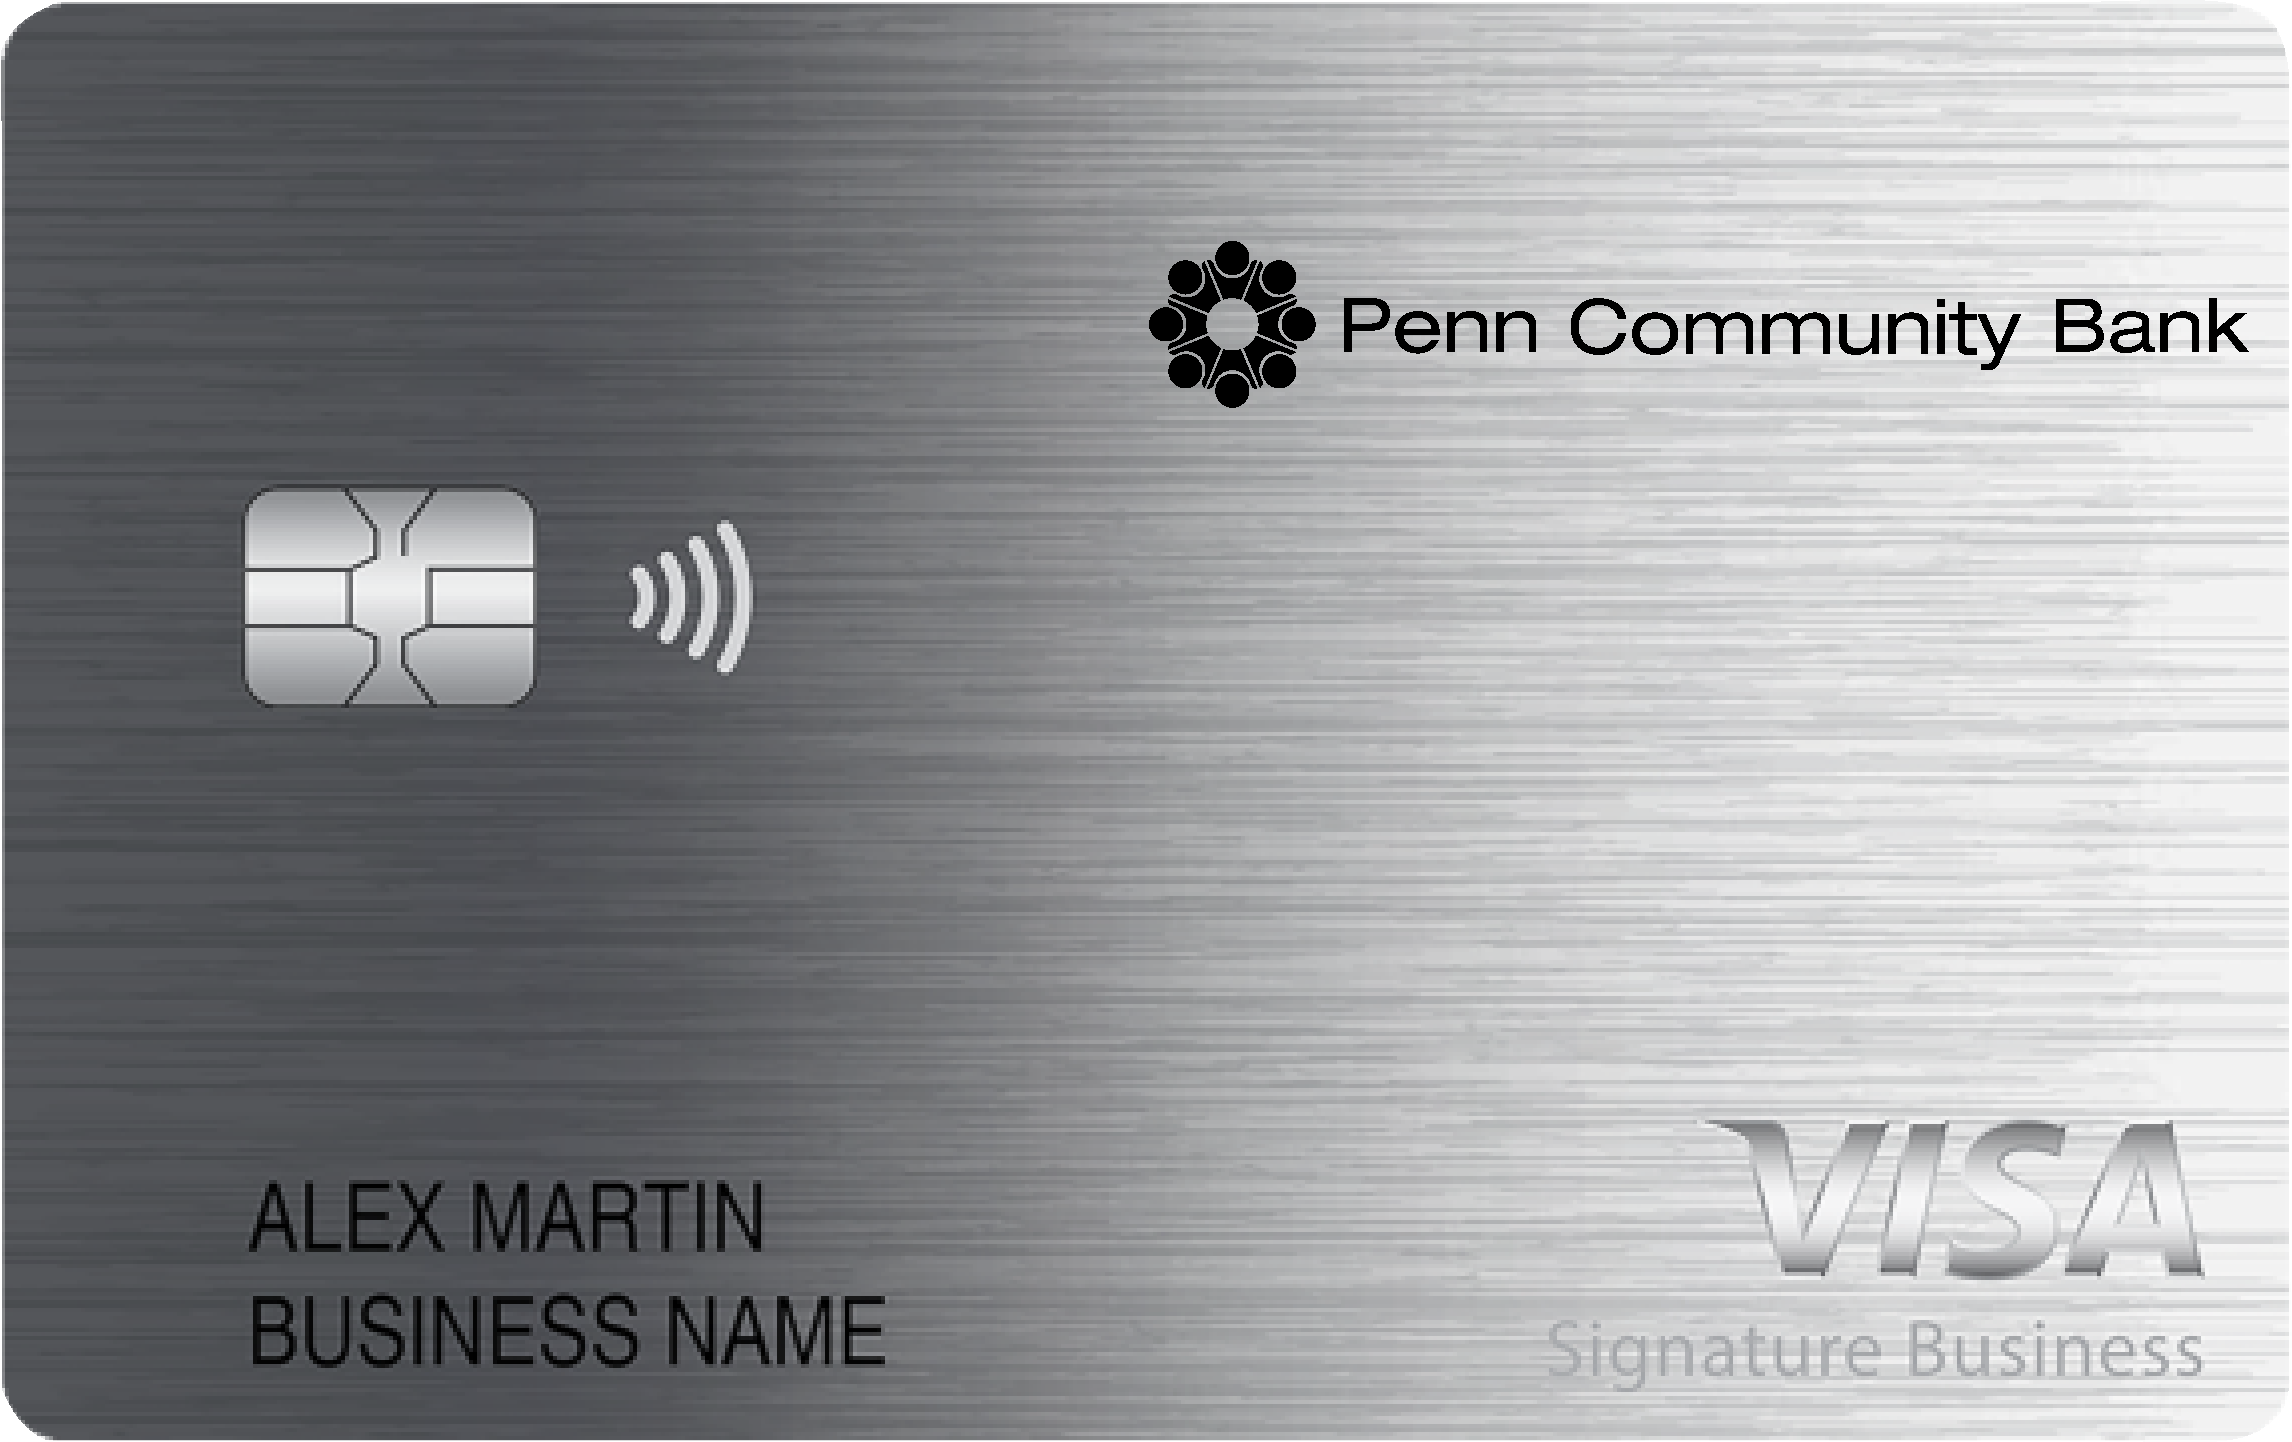 Penn Community Bank Smart Business Rewards Card